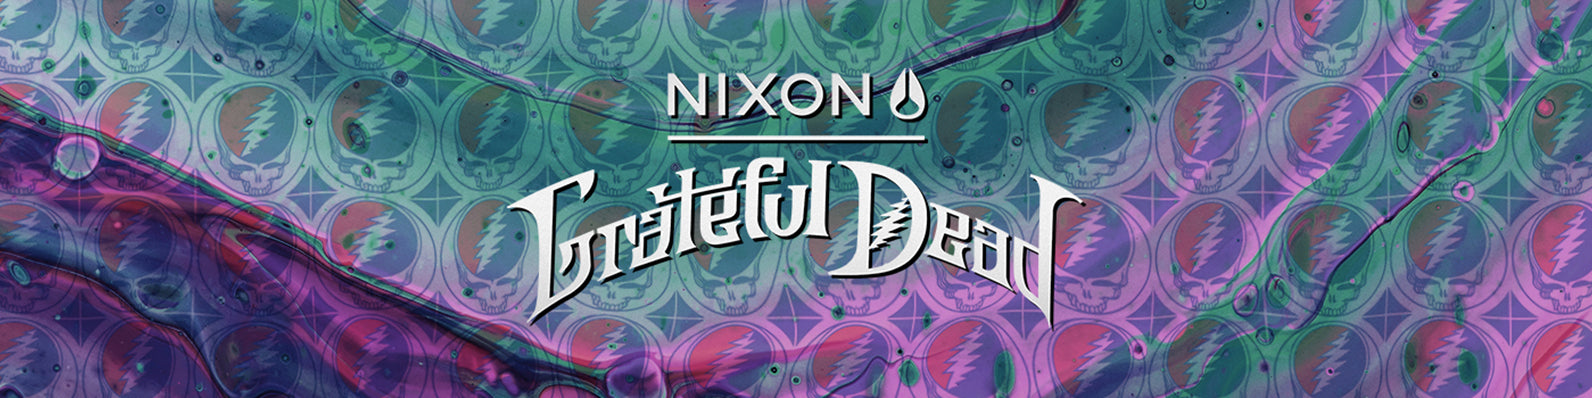 Nixon x Grateful Dead Watches